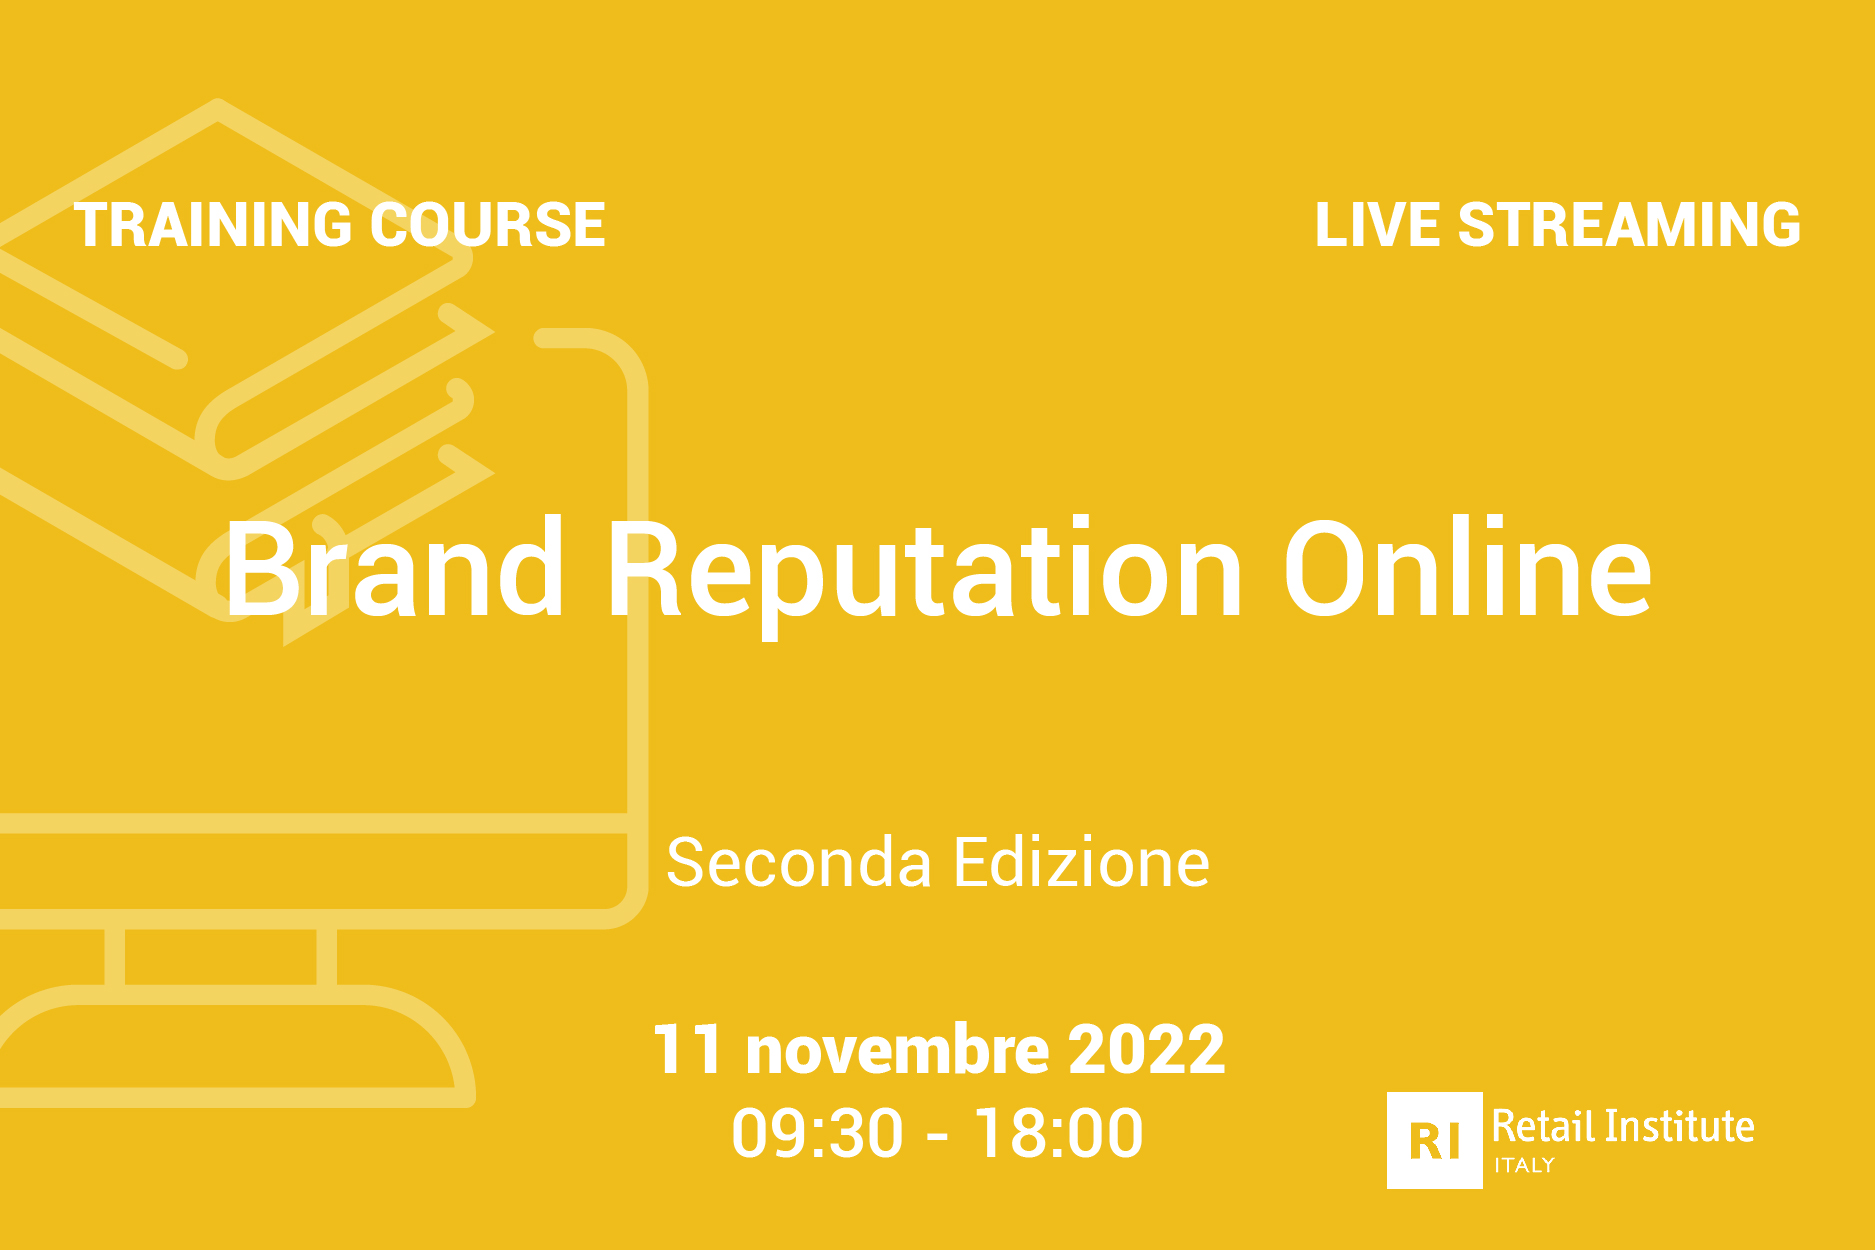 Training Course “Brand Reputation Online” – 11 novembre 2022